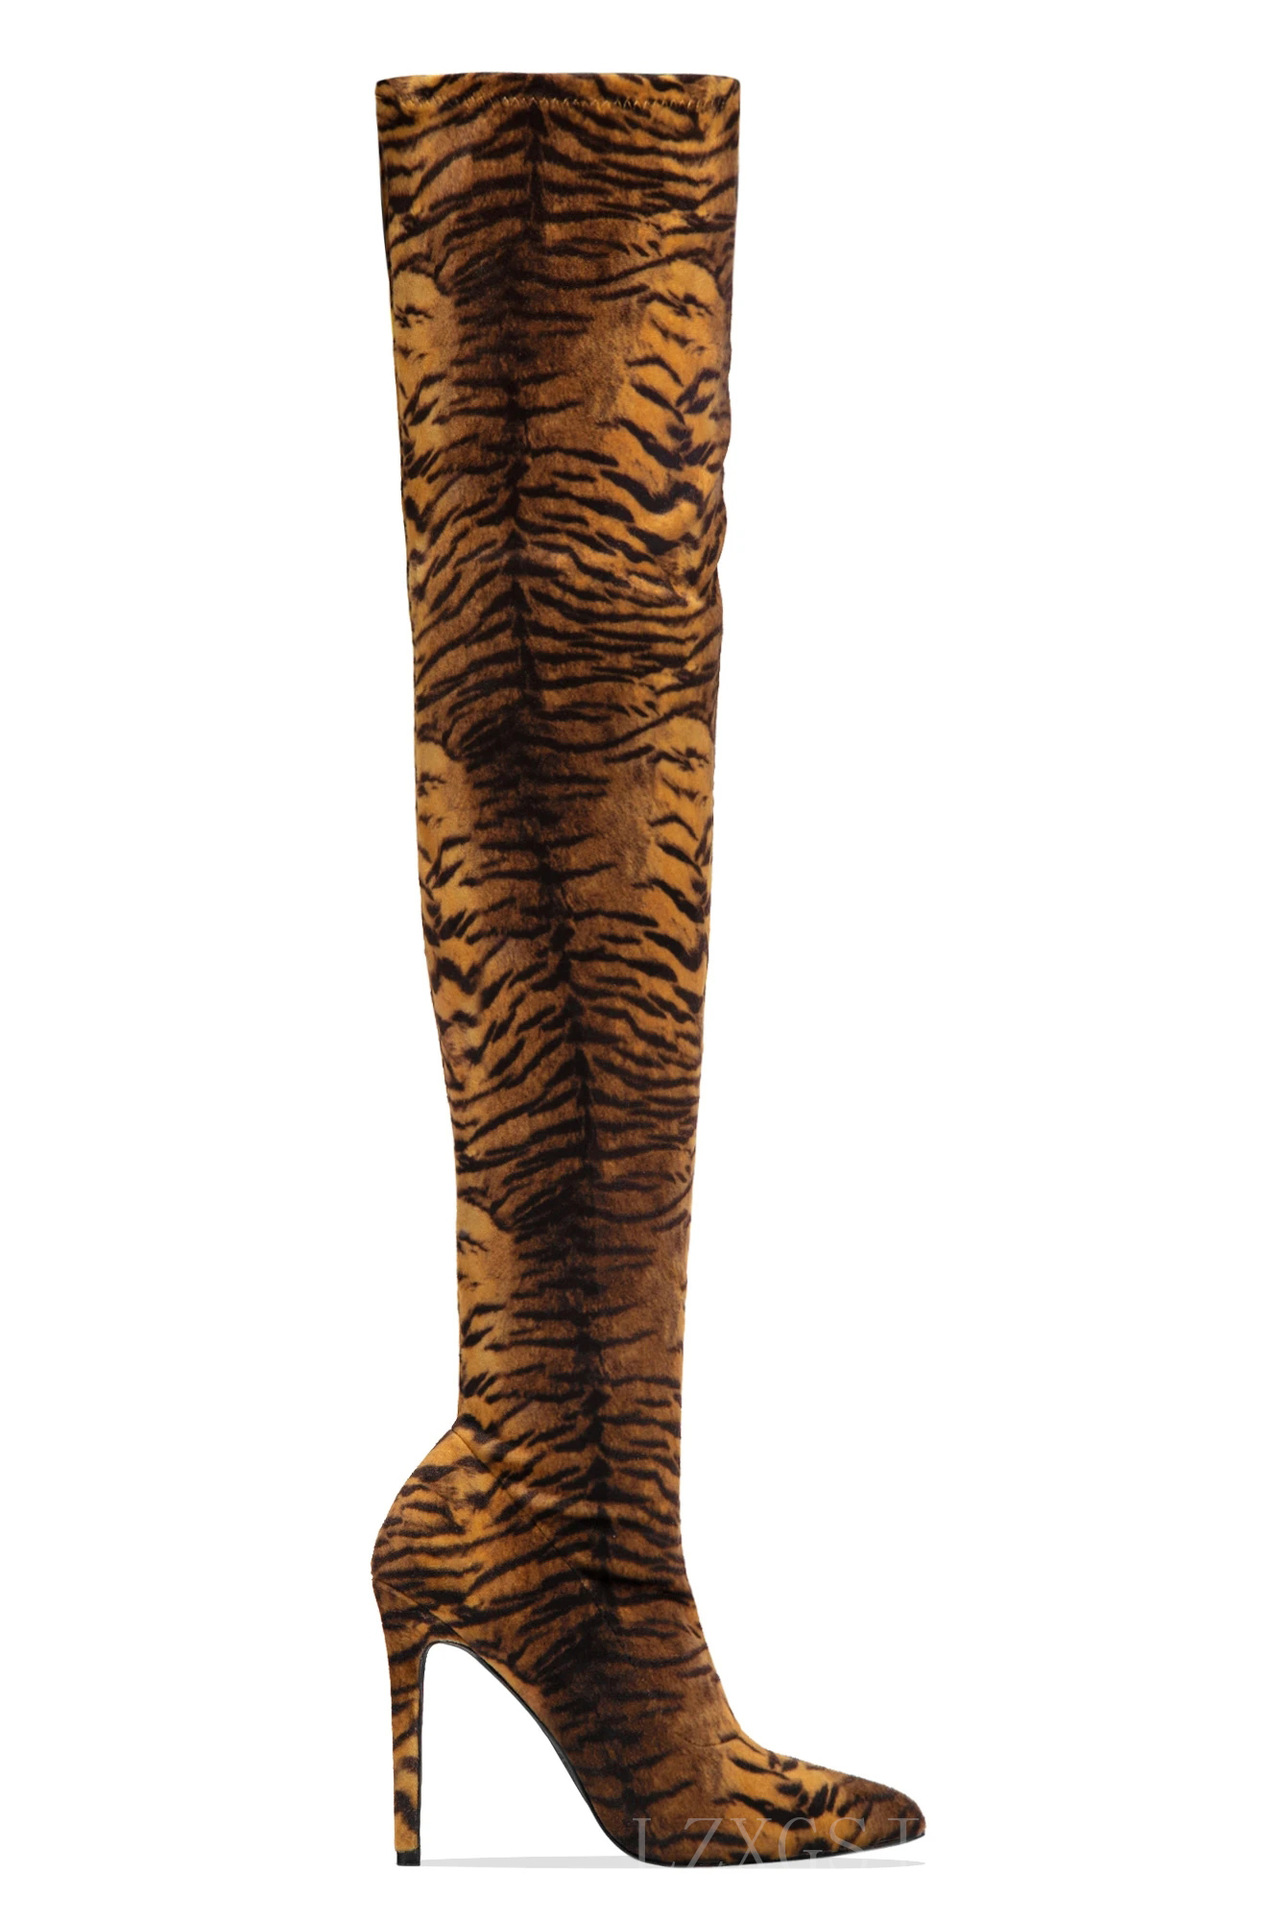 Leopard Black Knee High Heel Side Zipper Women's Boots